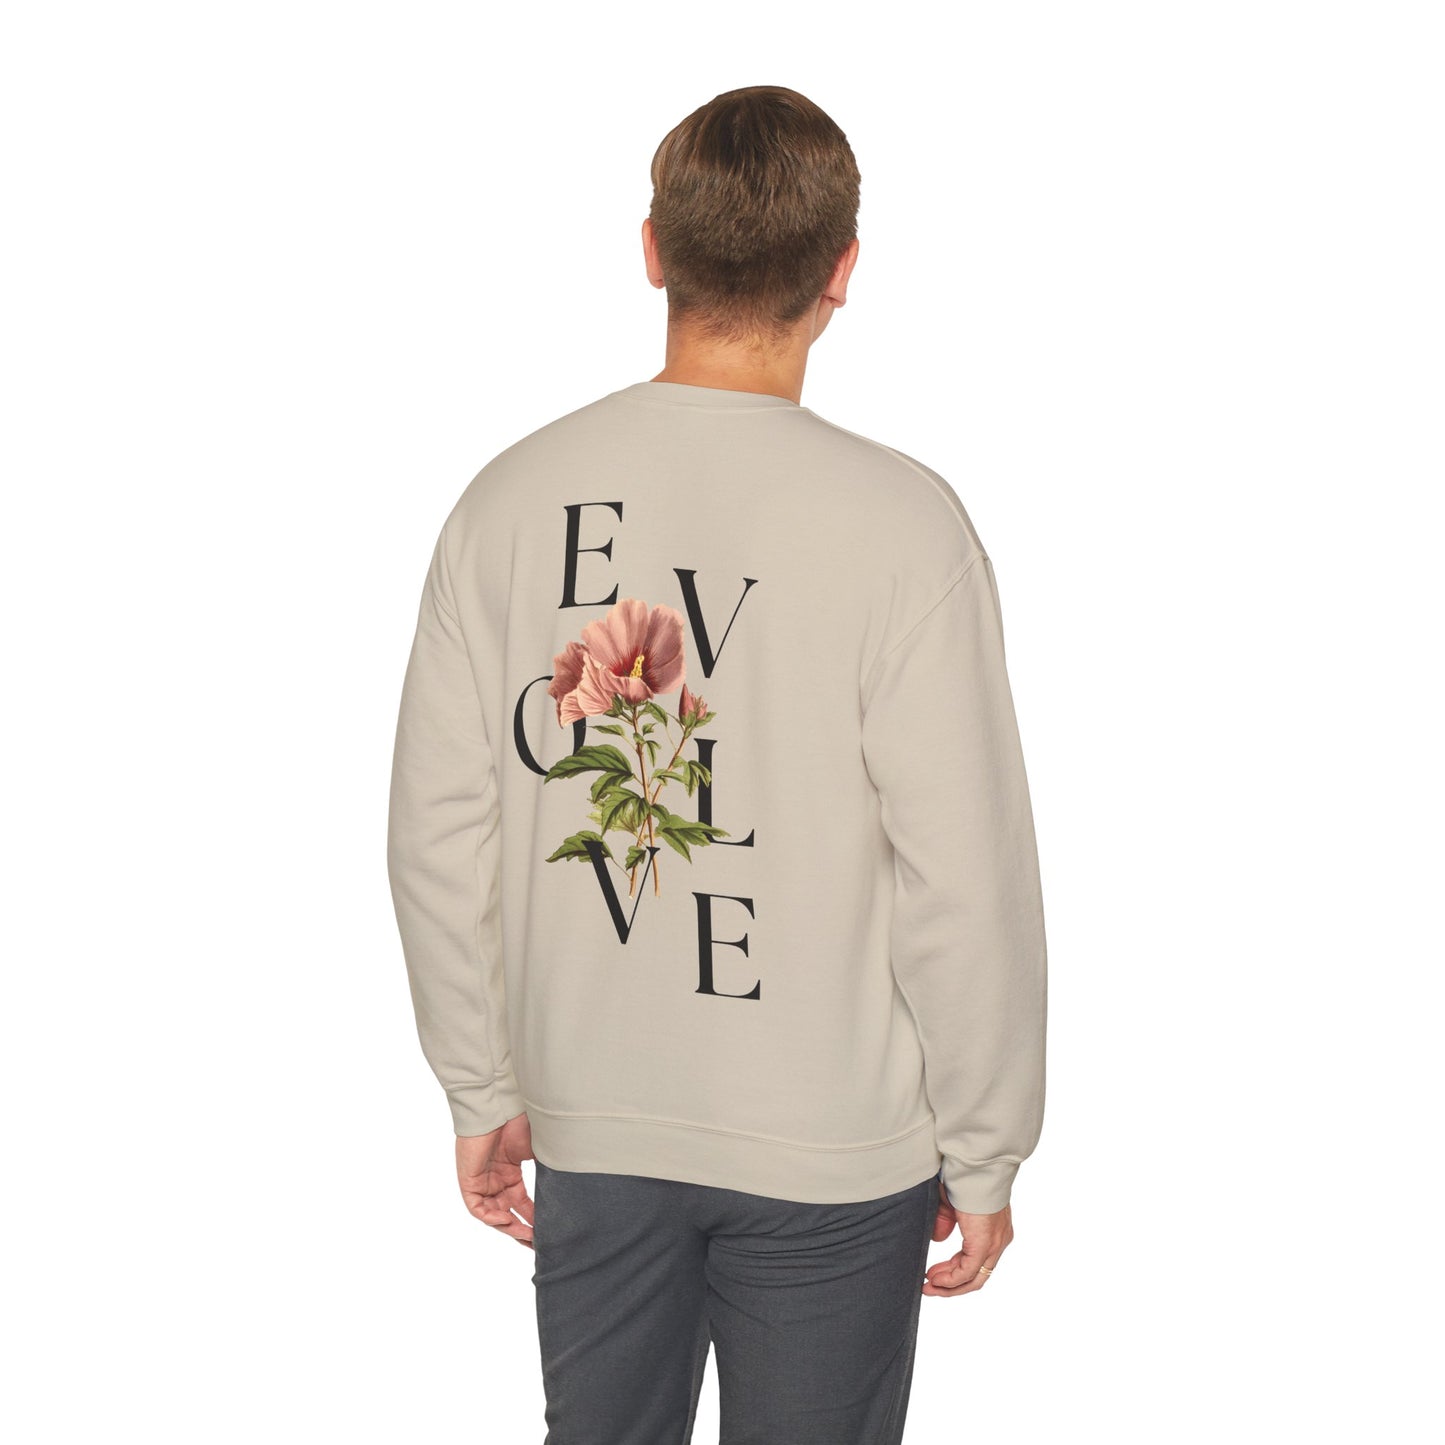 Evolve Crewneck Sweatshirt